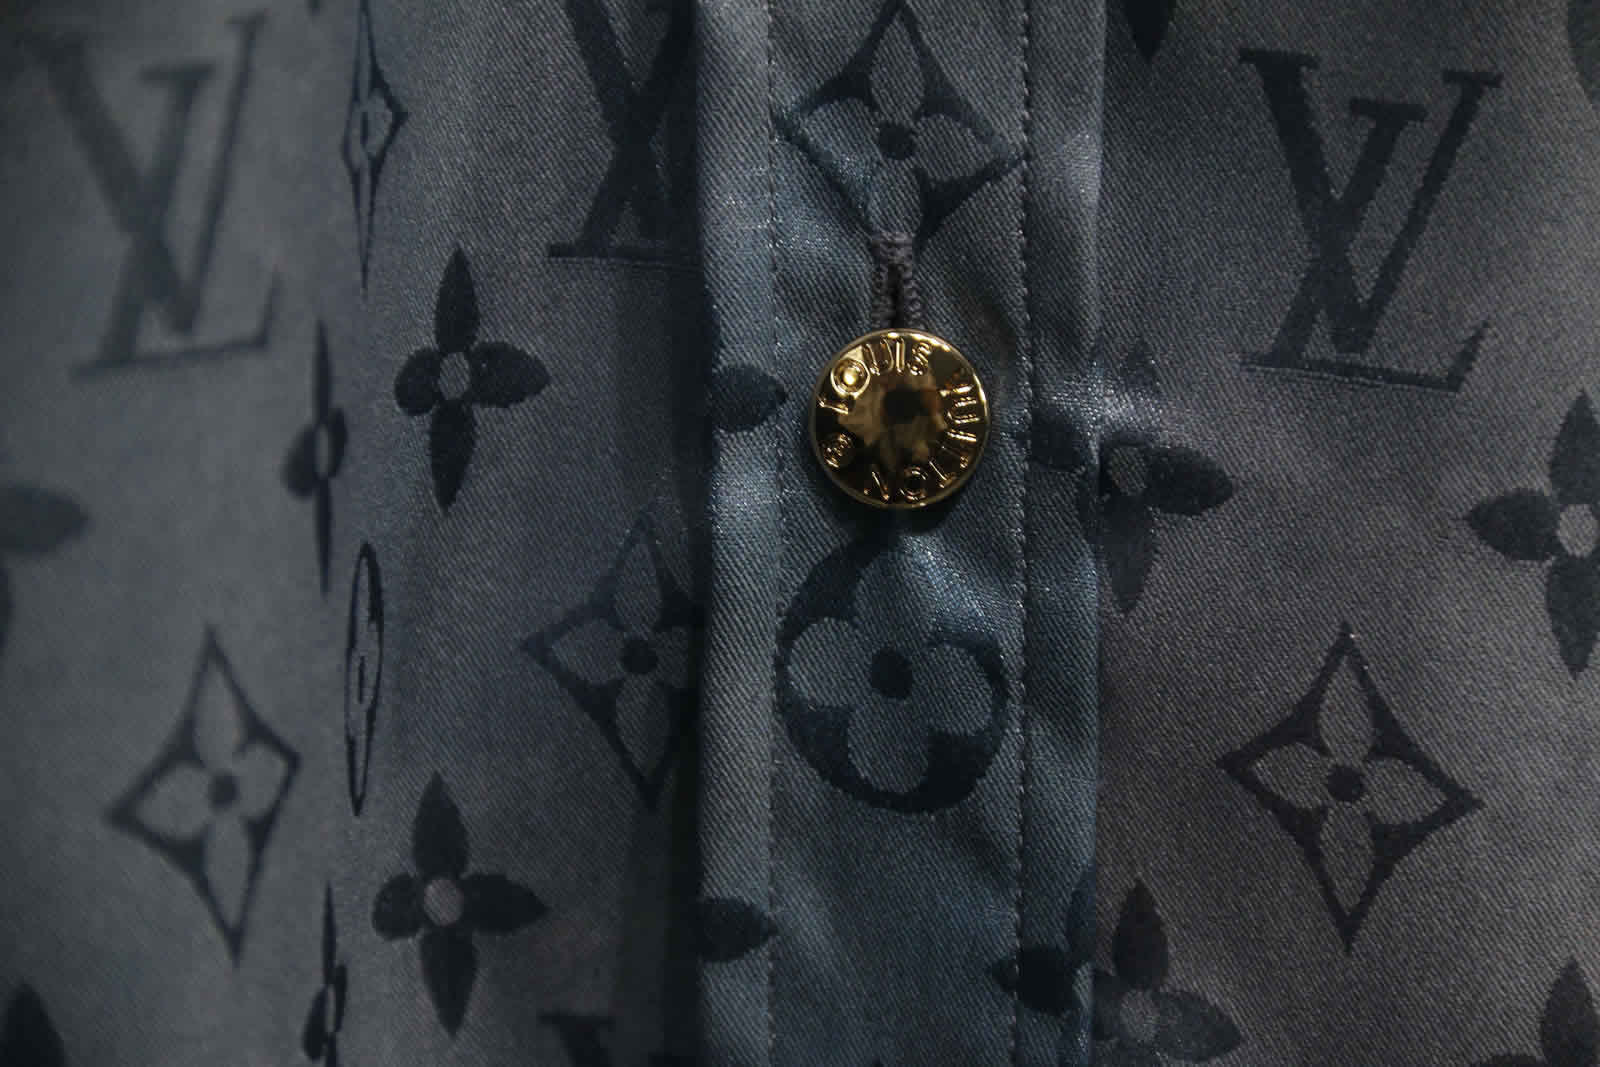 Silk shirt Louis Vuitton Black size 36 FR in Silk - 34843069